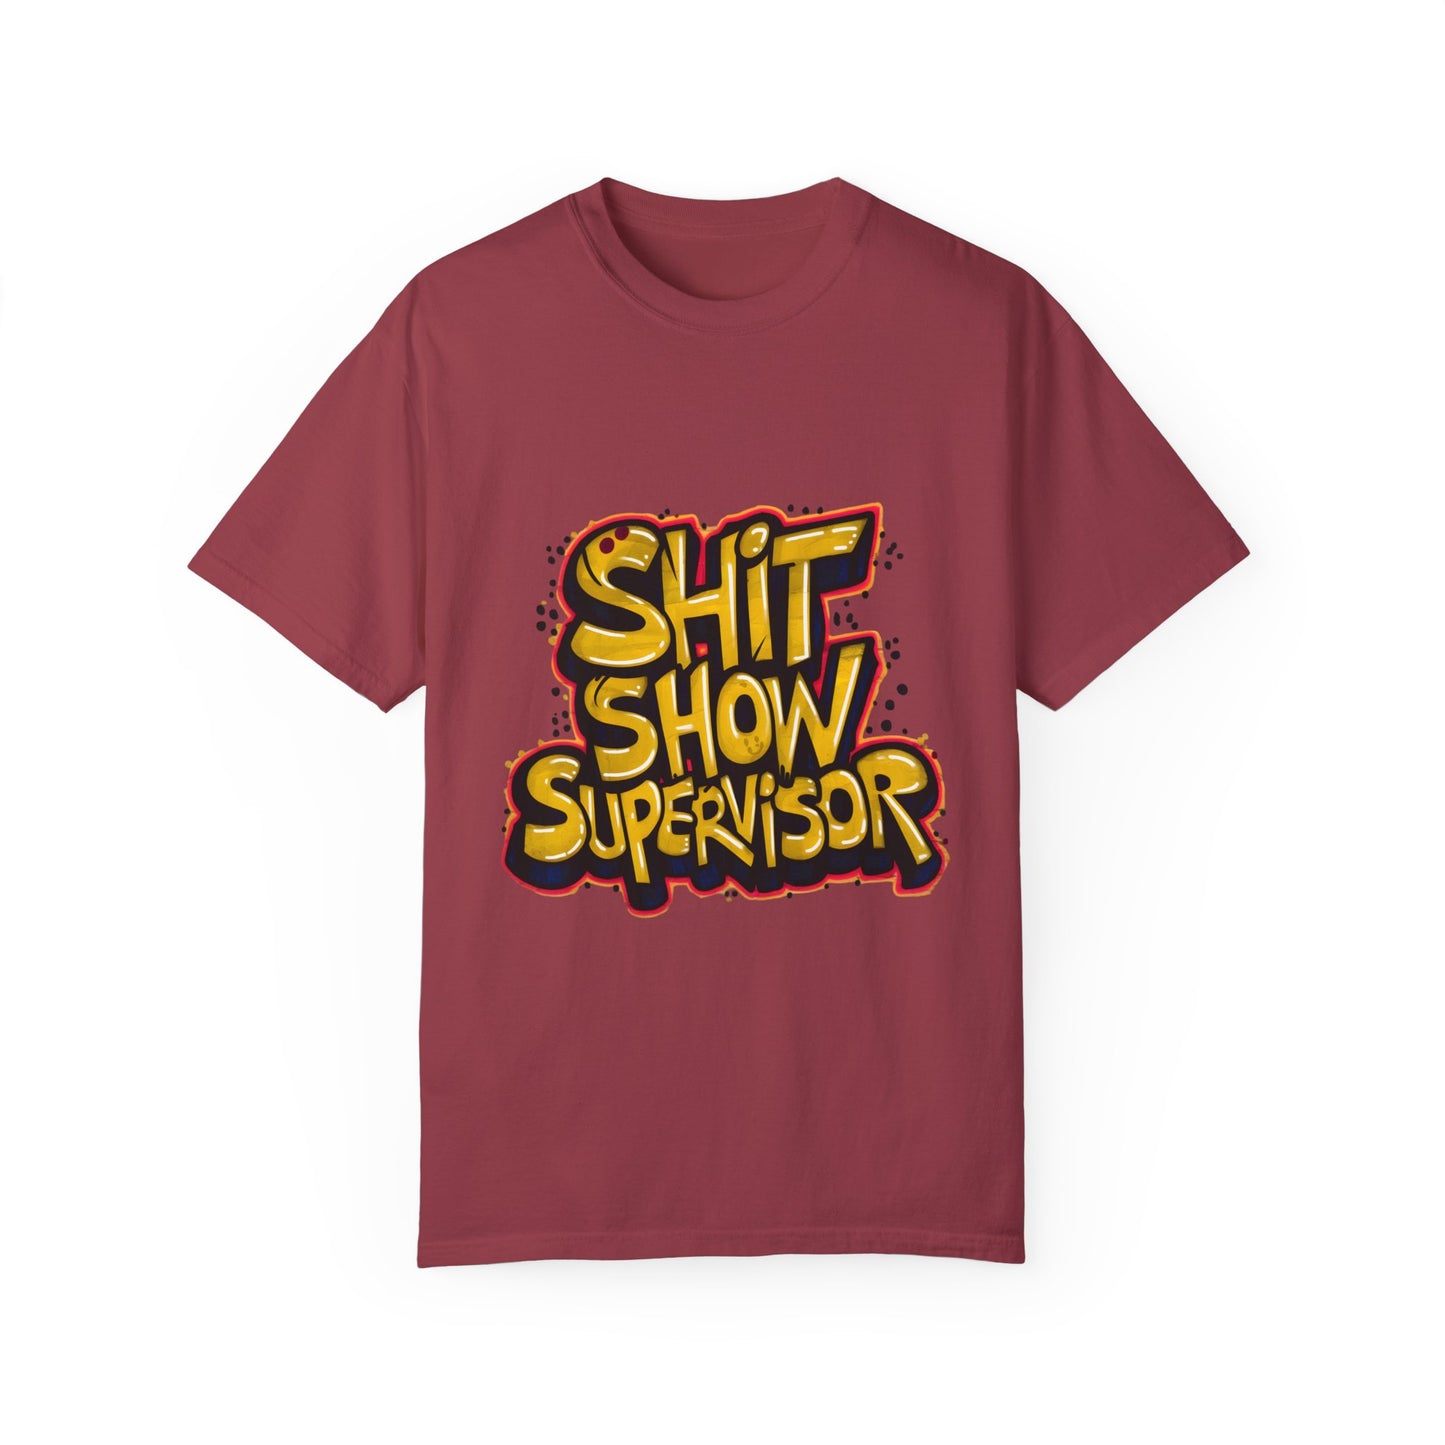 Shit Show Supervisor Urban Sarcastic Graphic Unisex Garment Dyed T-shirt Cotton Funny Humorous Graphic Soft Premium Unisex Men Women Chili T-shirt Birthday Gift-7